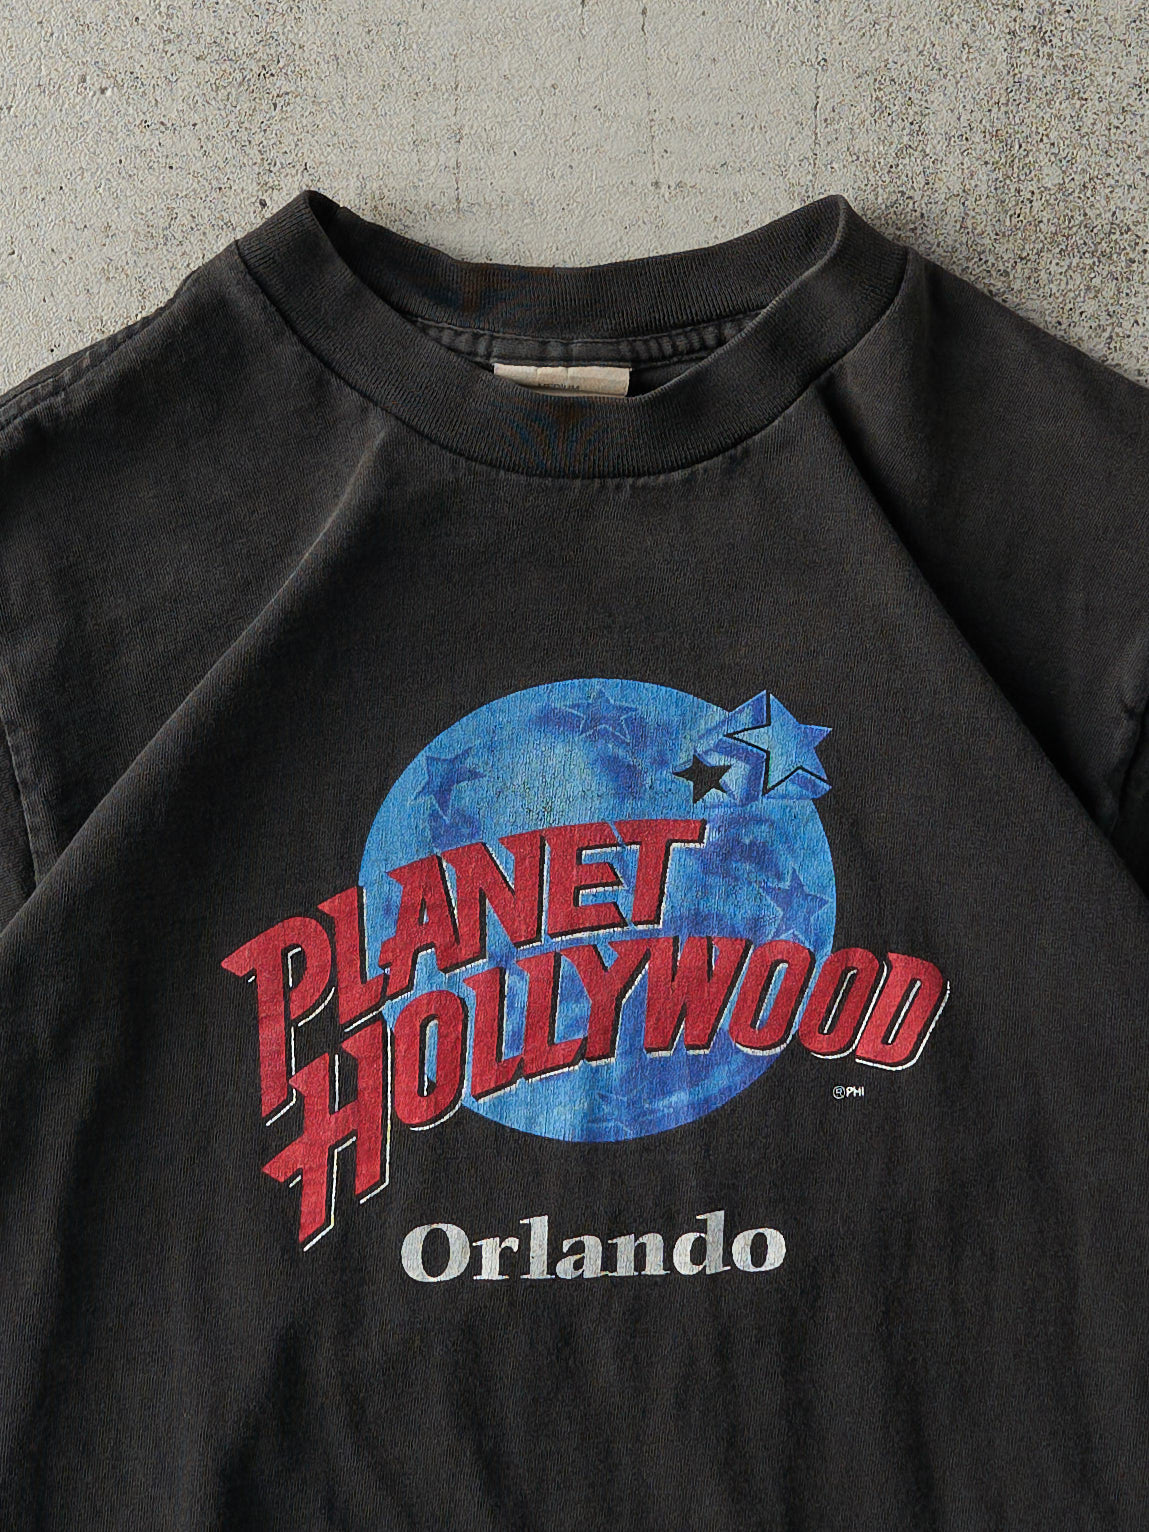 Vintage 90s Black Orlando Planet Hollywood Single Stitch Tee (S)